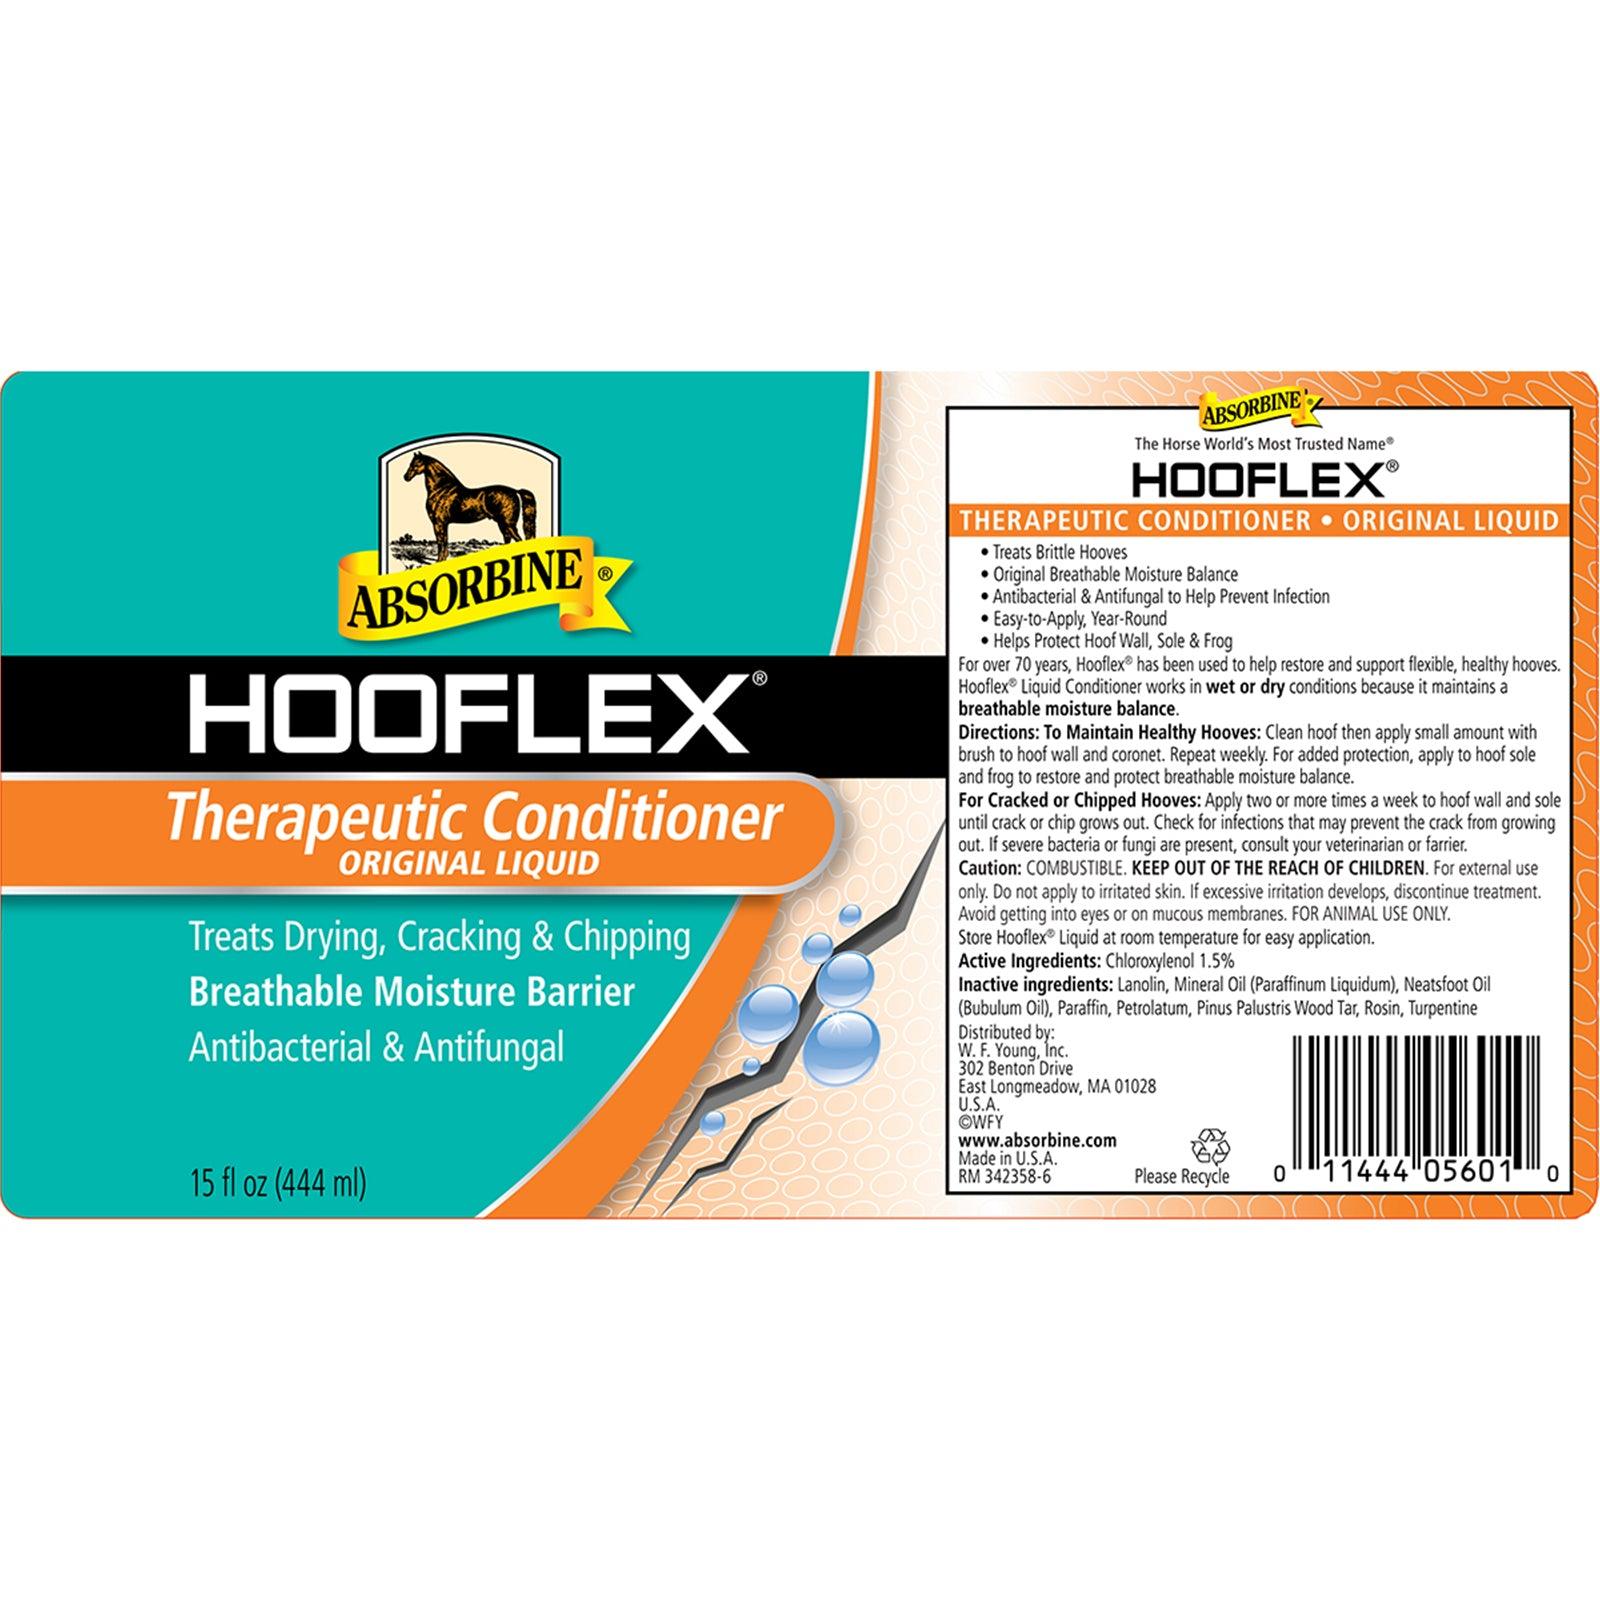 Absorbine Hooflex Therapeutic Conditioner original liquid. Treats drying, cracking & chipping. Breathable moisture barrier, antibacterial & antifungal 15 fluid oz. bottle wrap around label.